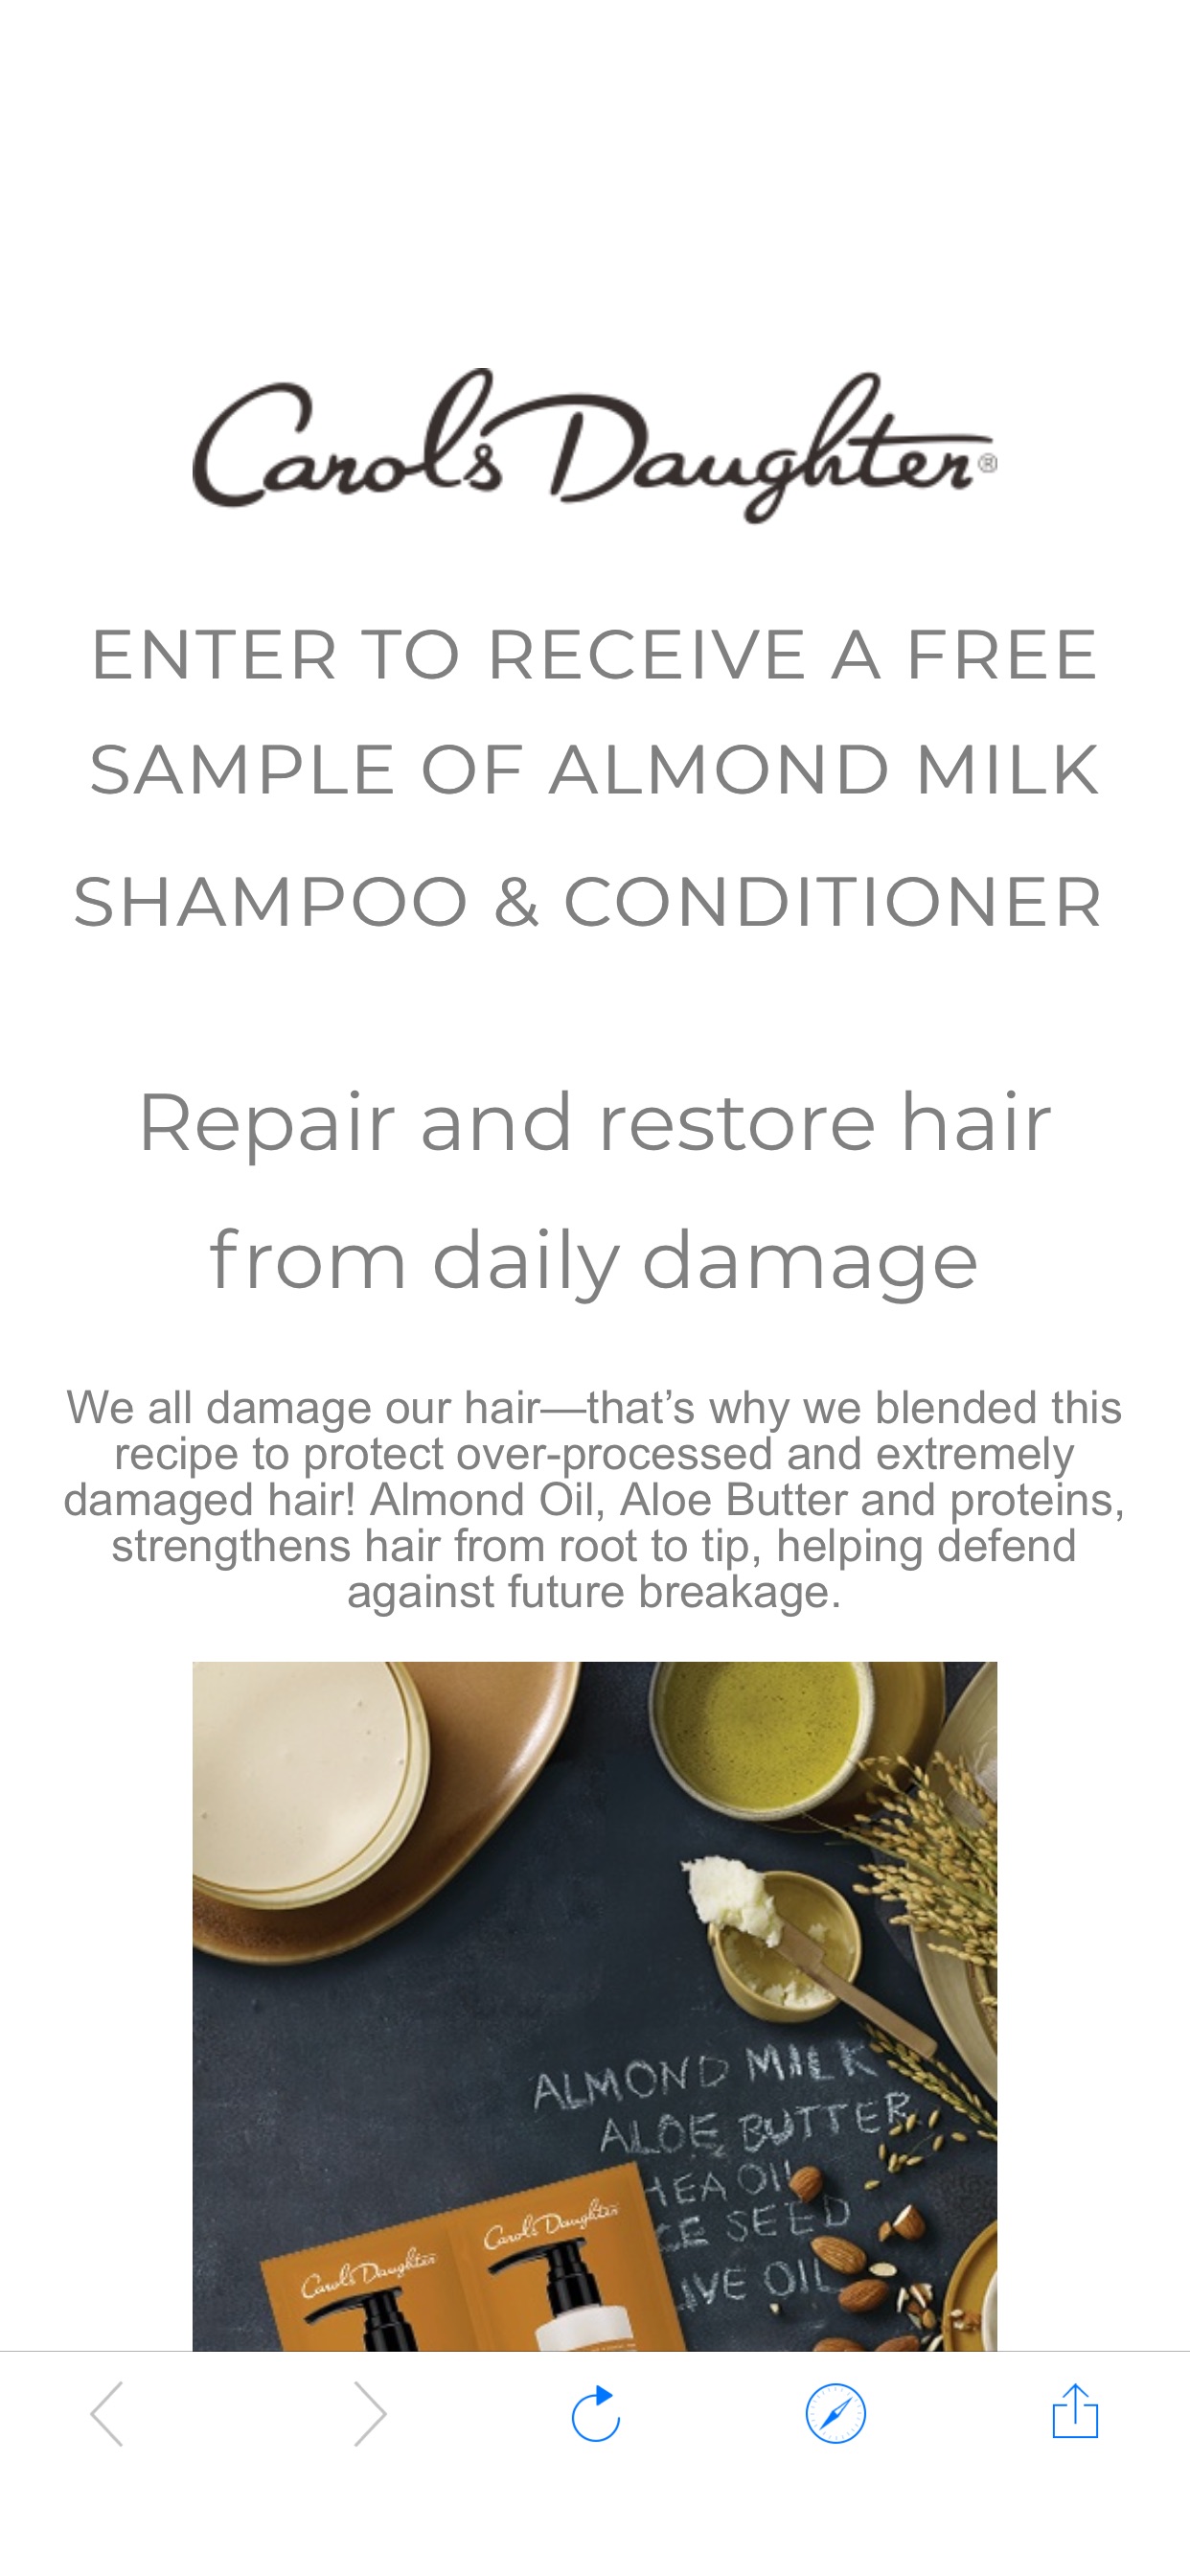 Almond Milk洗发水和护发素样品